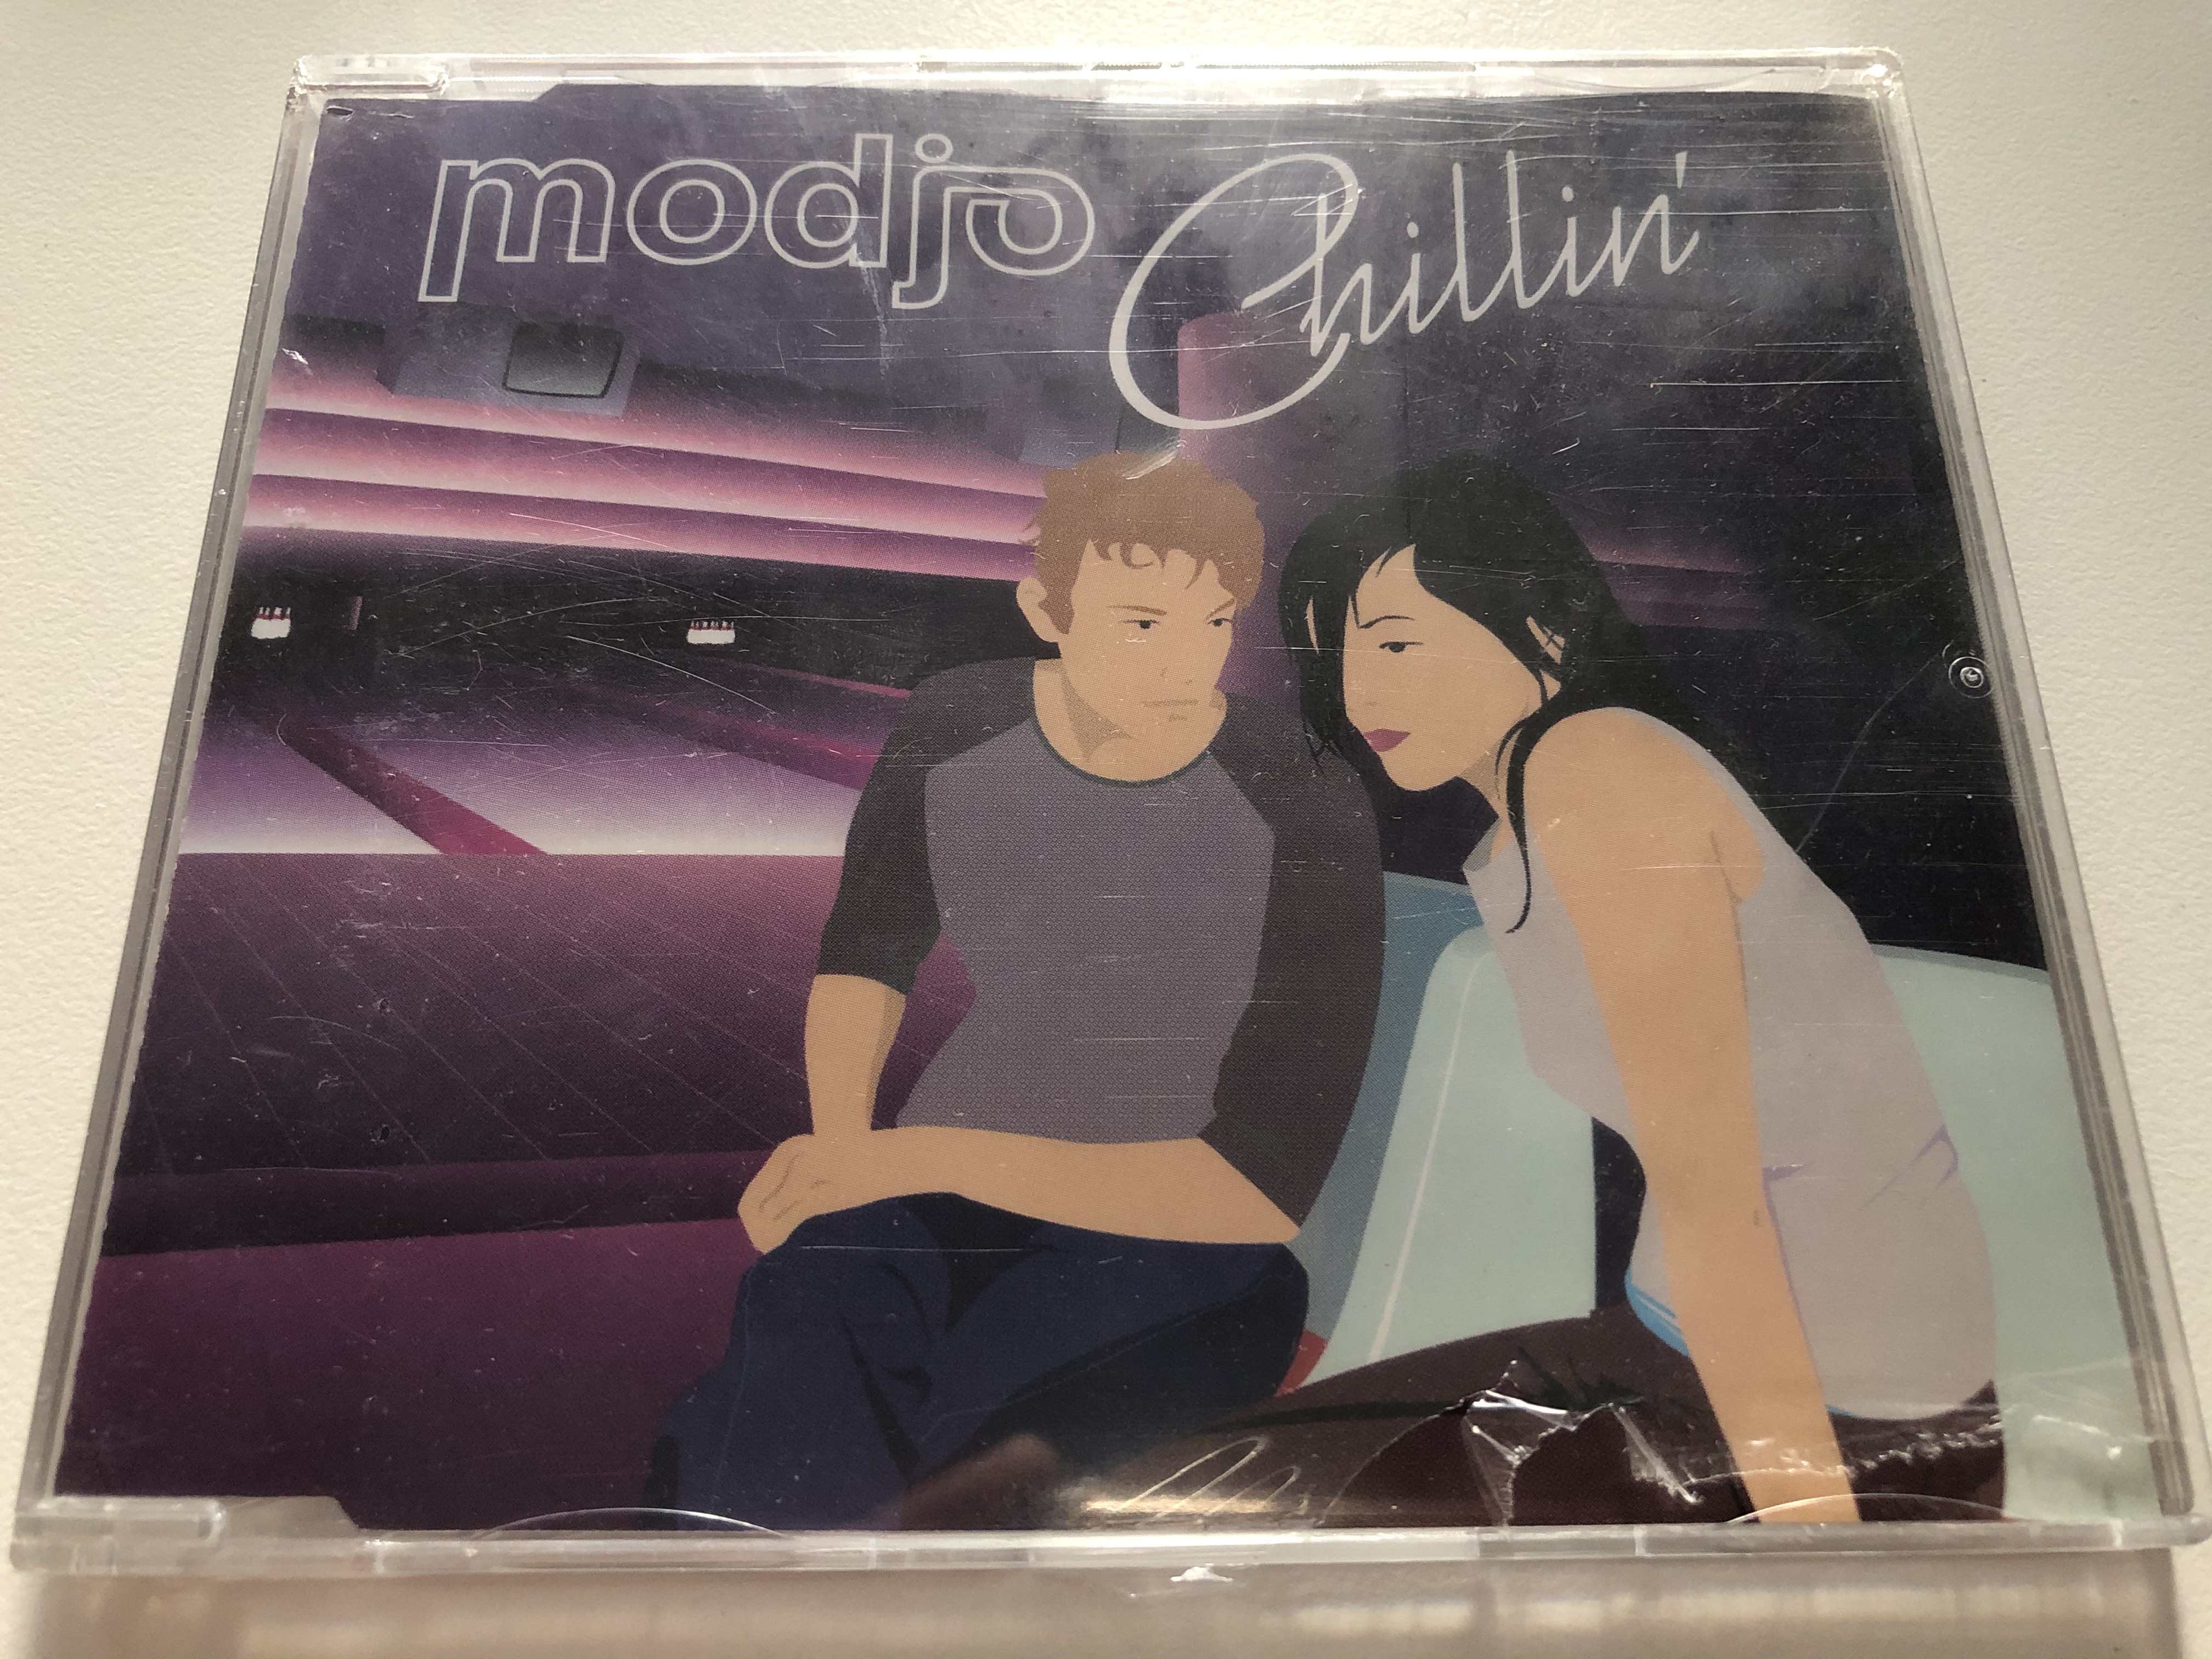 modjo-chillin-universal-music-audio-cd-2001-587-848-2-1-.jpg